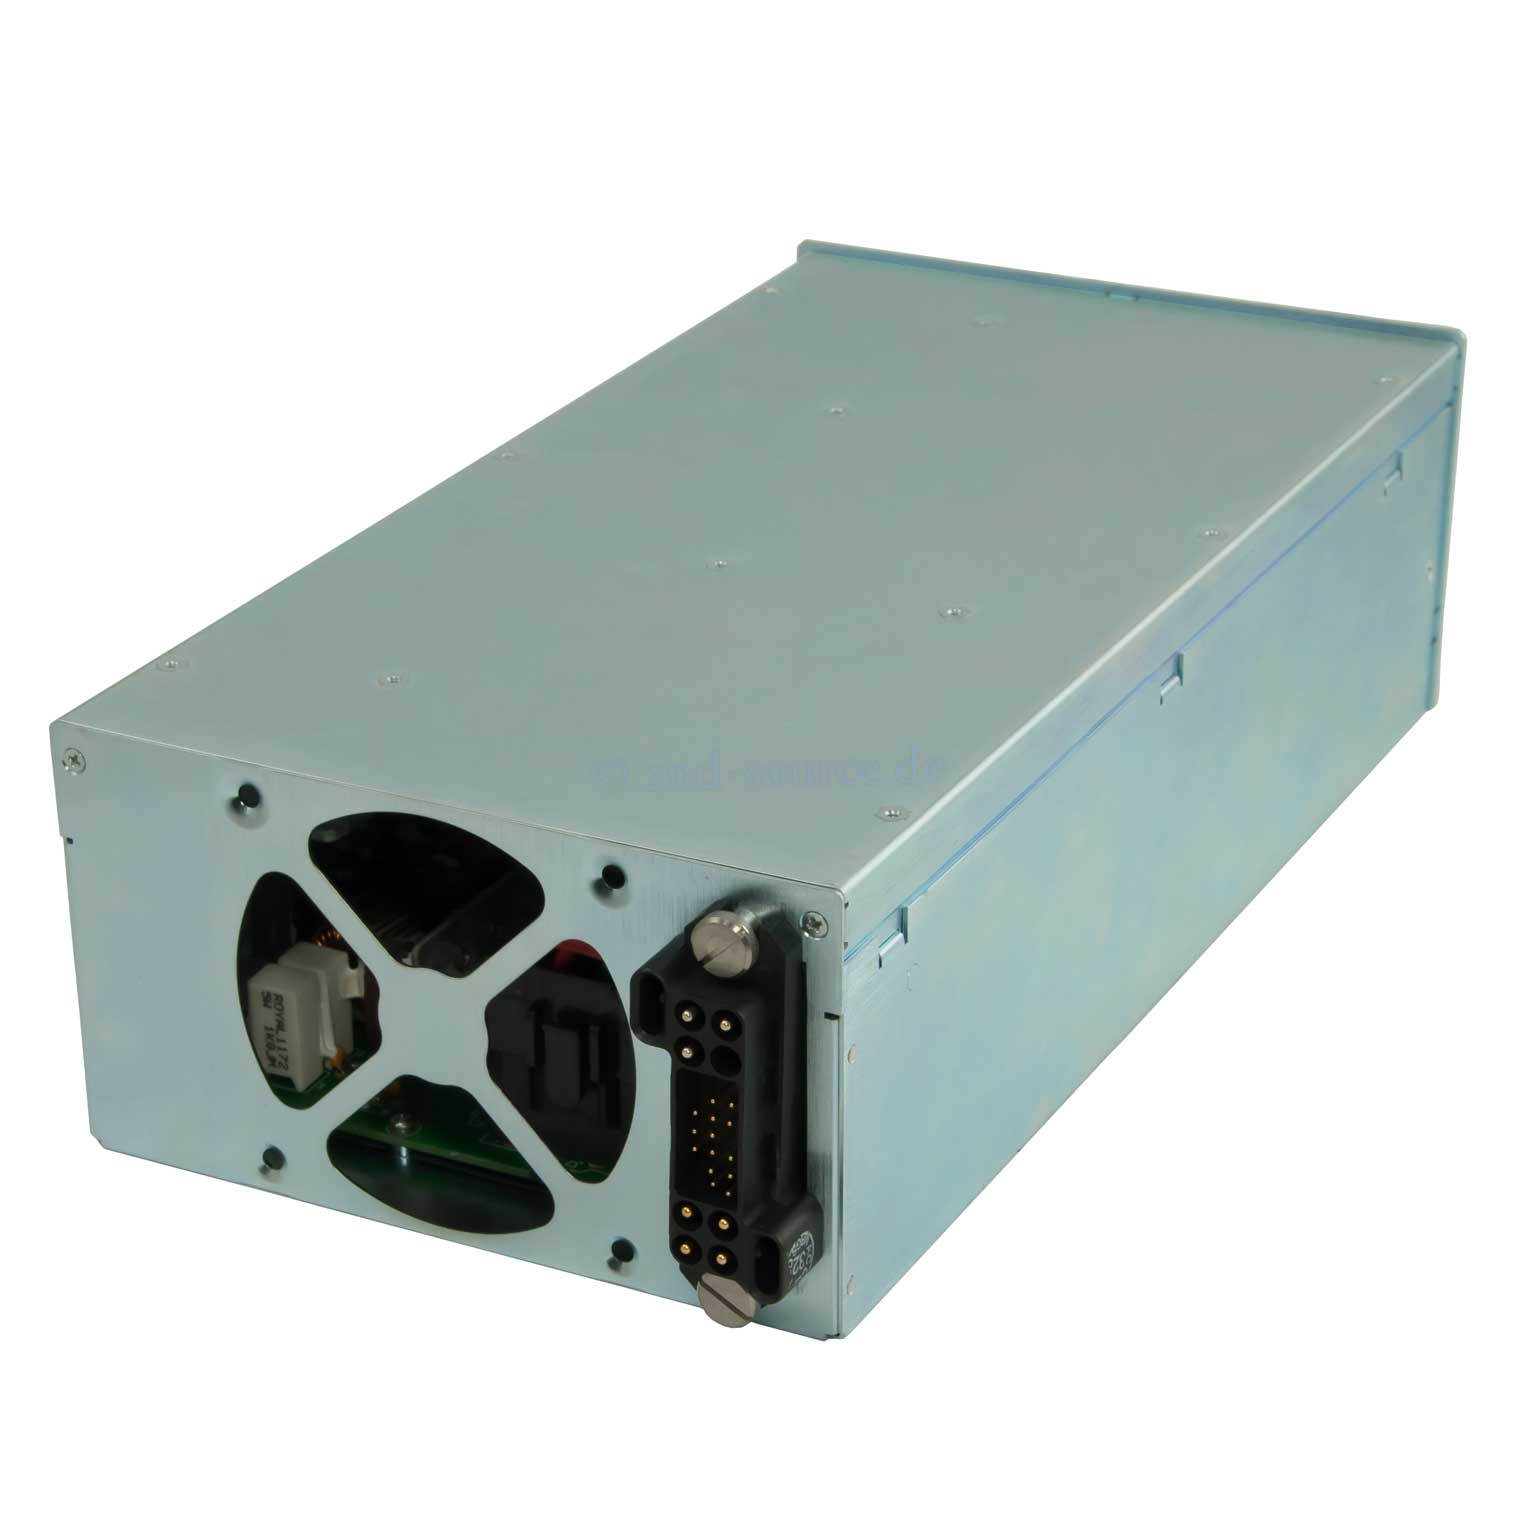 HPE StoreEver ESL G3 1500W Redundant Power Supply QP008A 652715-001